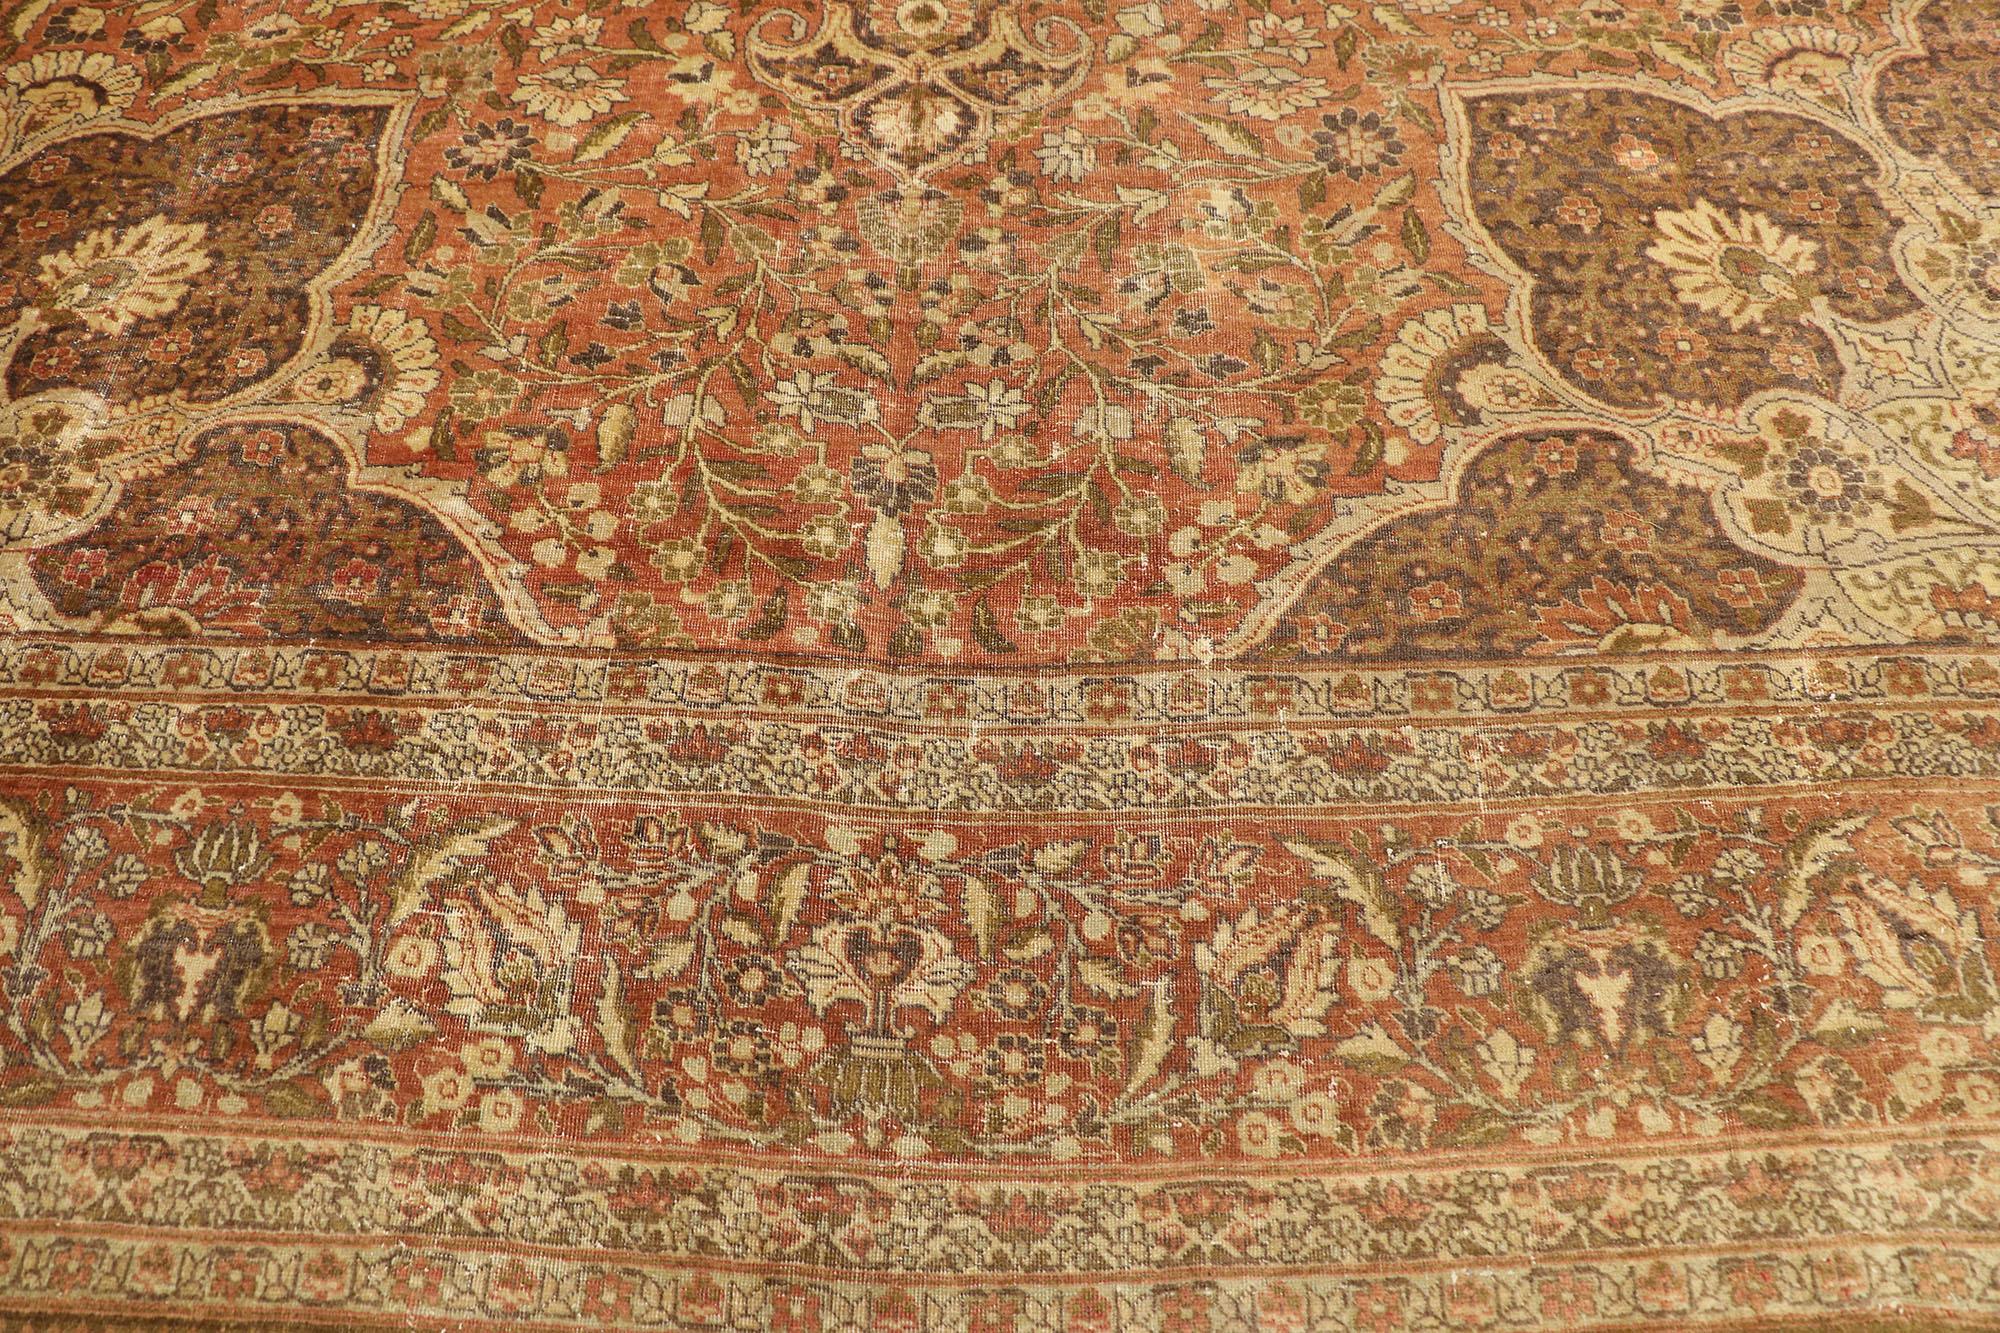 Haji Khalili Antique Persian Tabriz Rug, Hotel Lobby Size Carpet In Good Condition For Sale In Dallas, TX